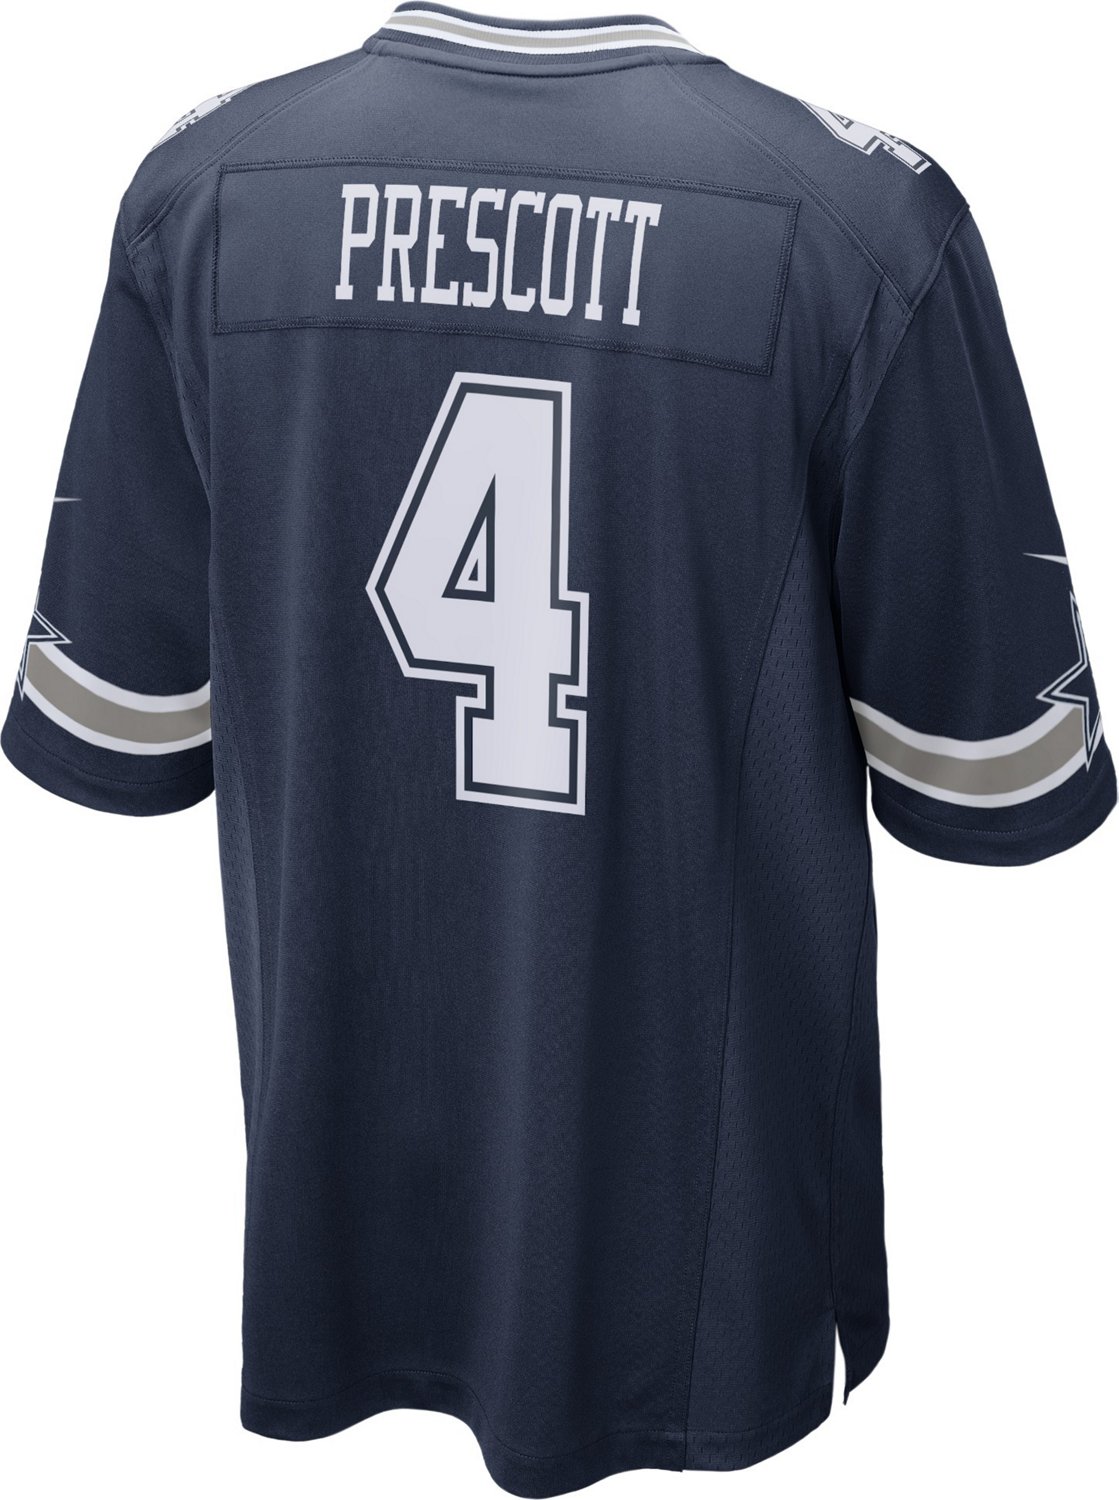 Nike Men's Dallas Cowboys Prescott Game Jersey | Academy